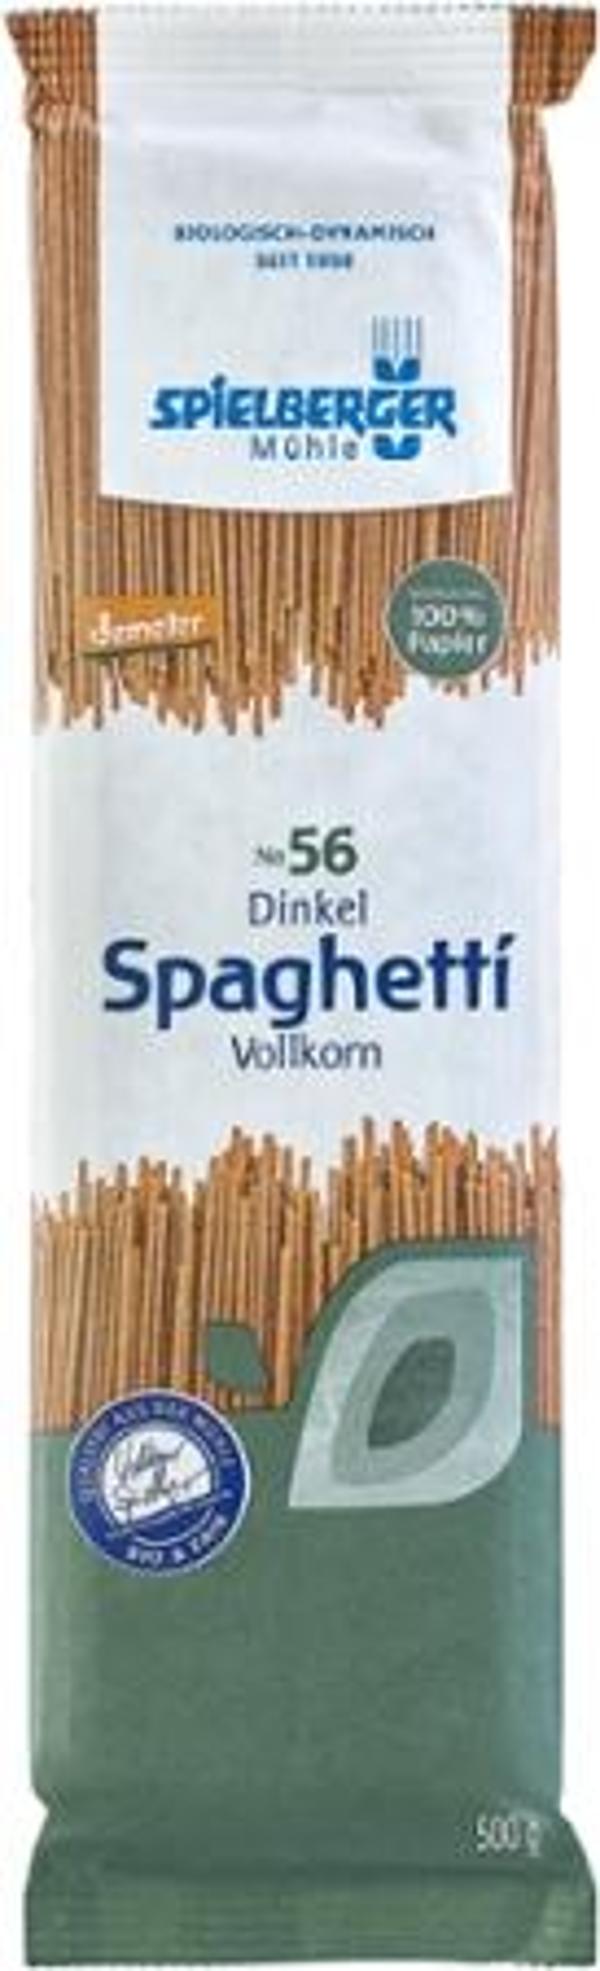 Produktfoto zu Dinkel-Vollkorn-Spaghetti